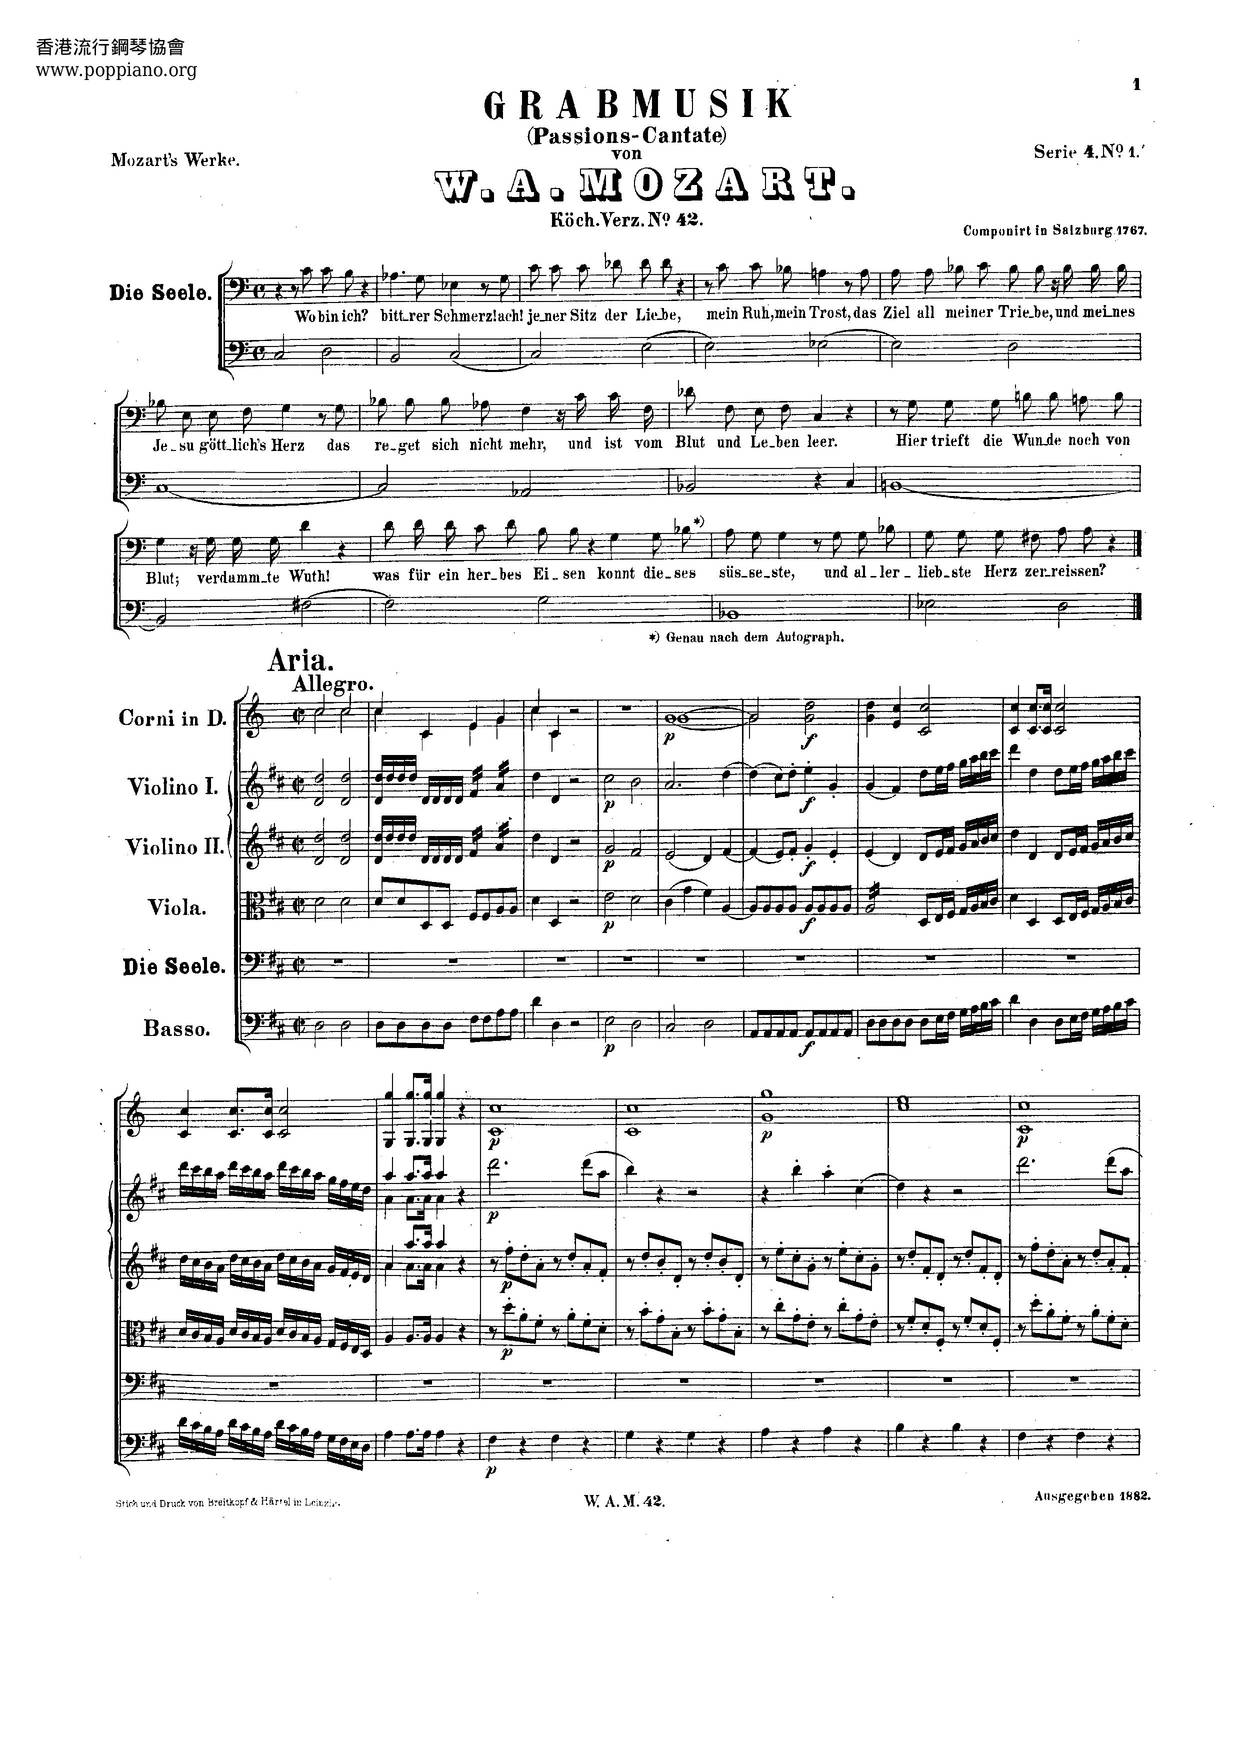 Grabmusik, K. 42/35Aピアノ譜